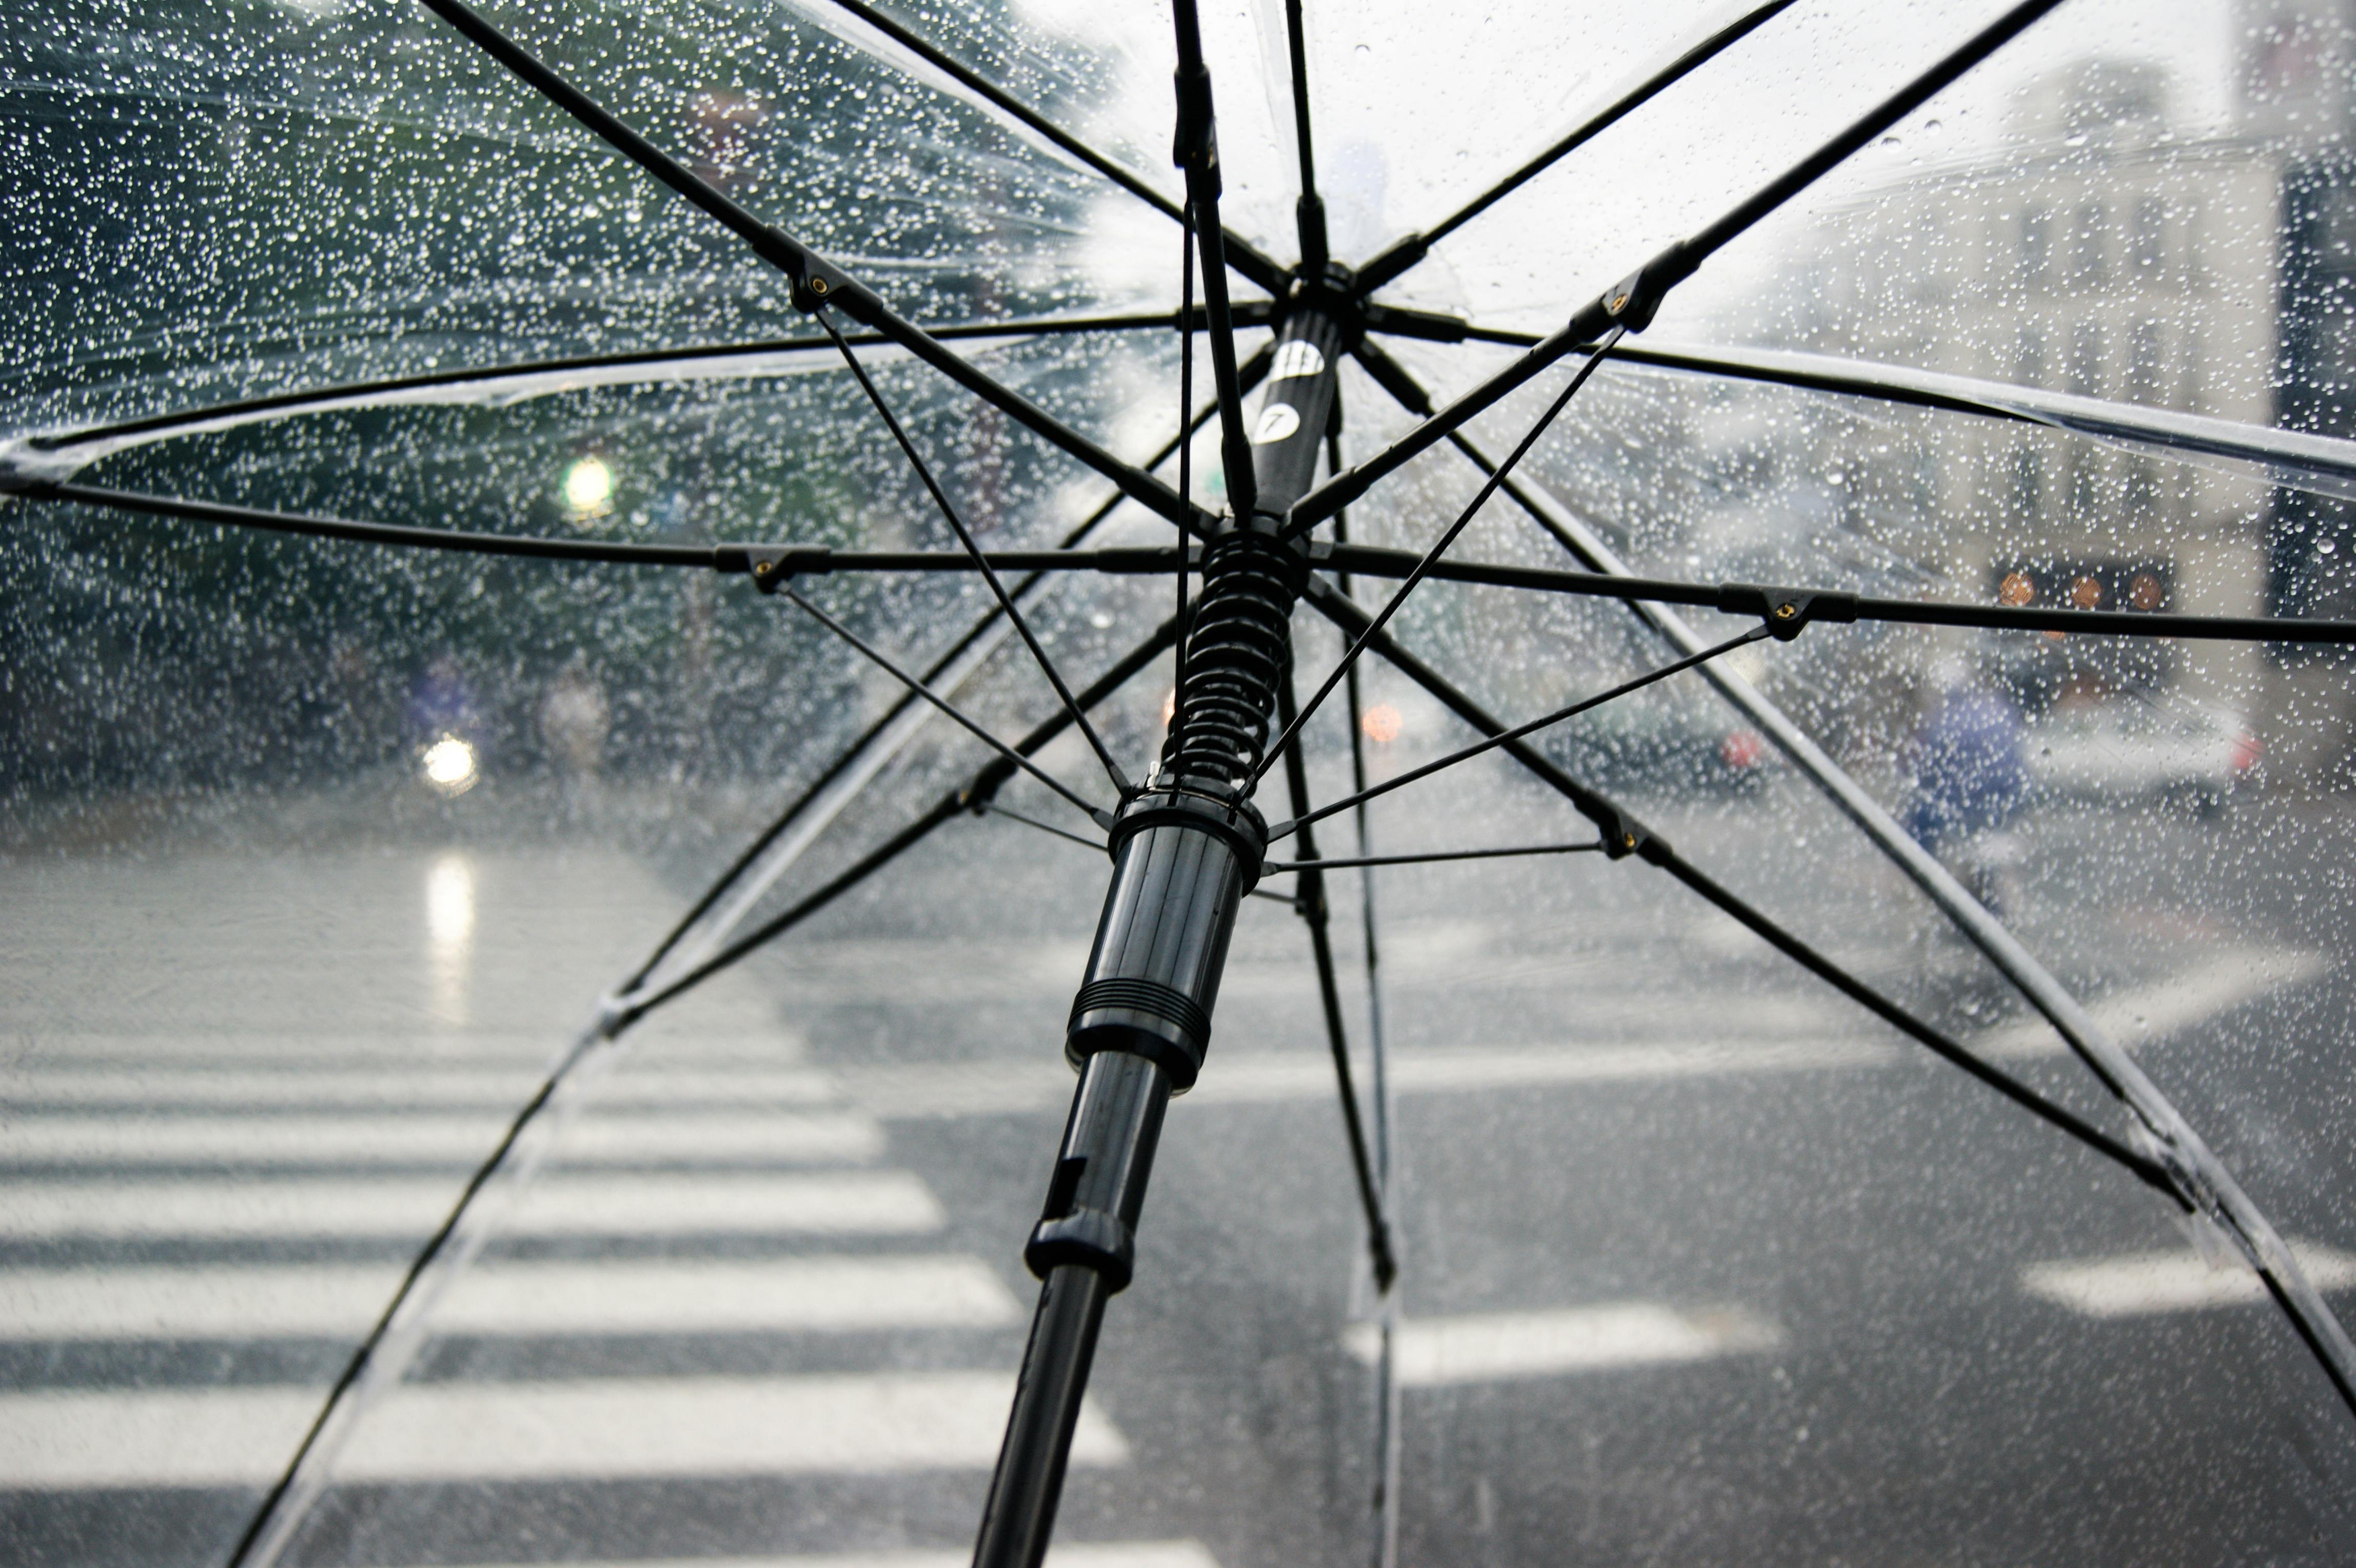 rain and umbrella background